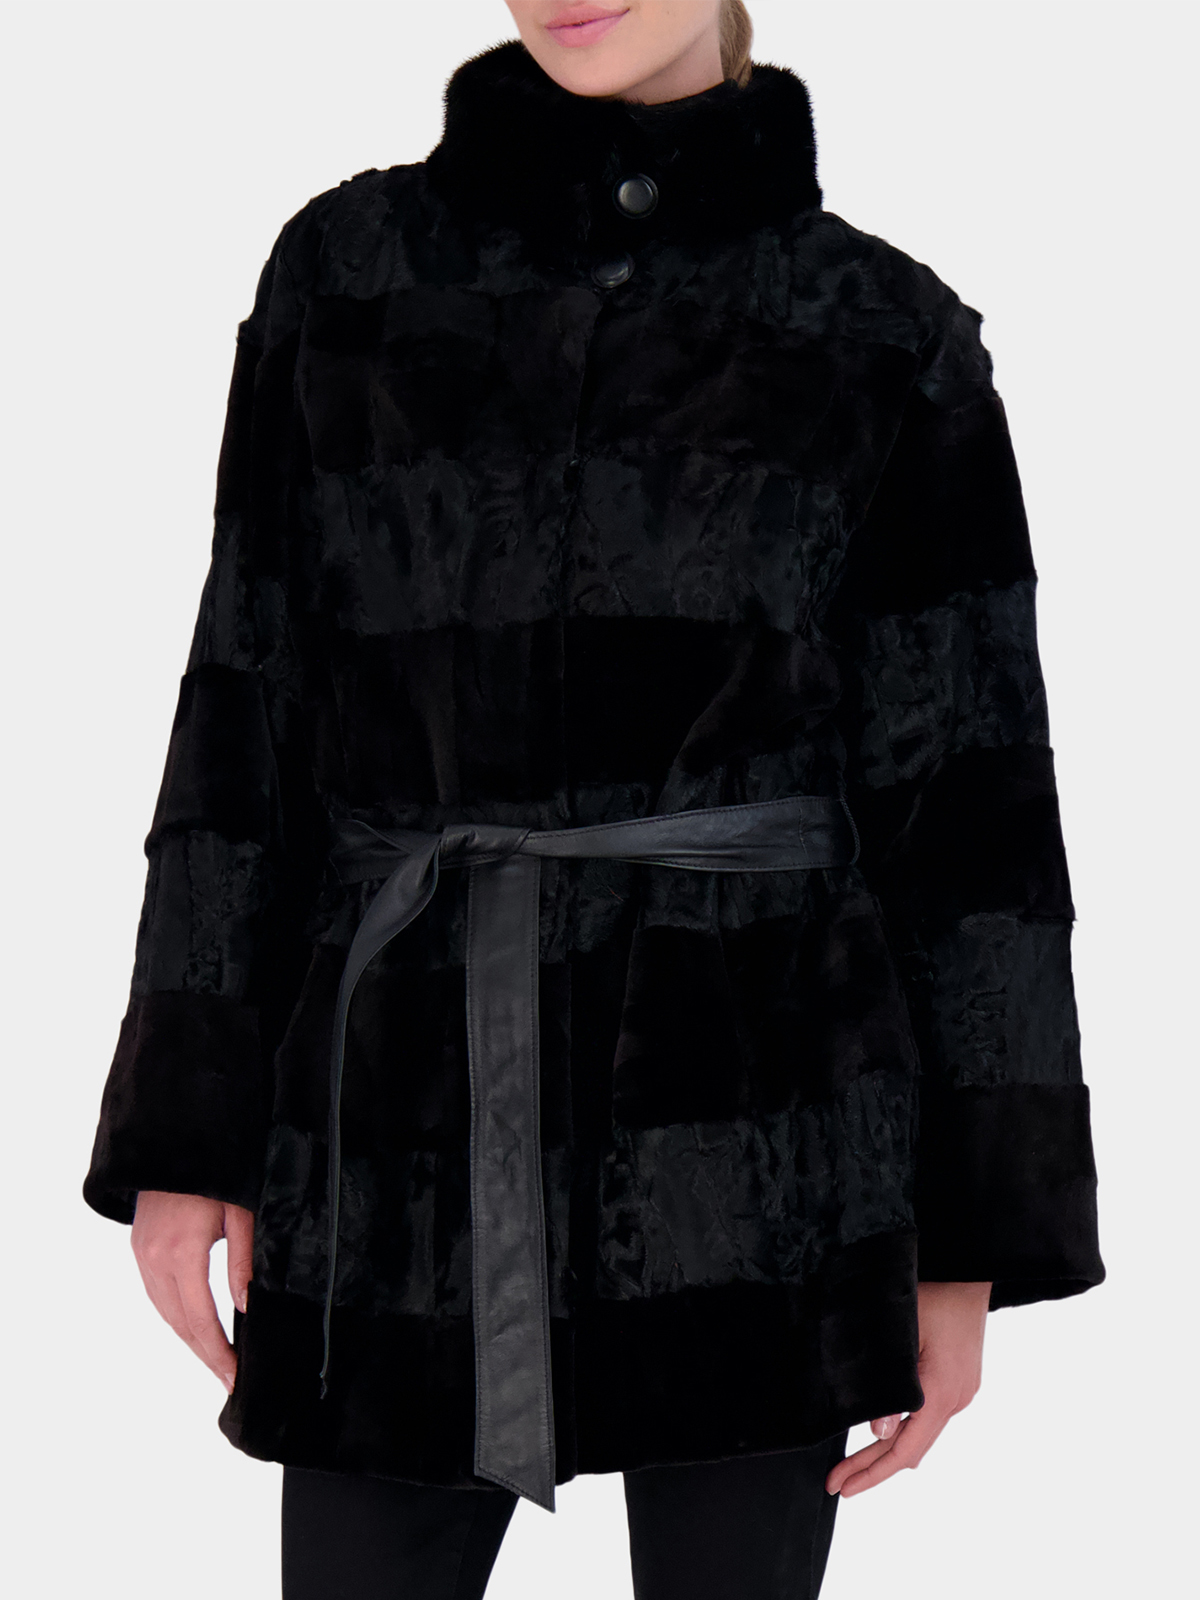 Woman's Black Persian Lamb and Mink Sections Fur Jacket